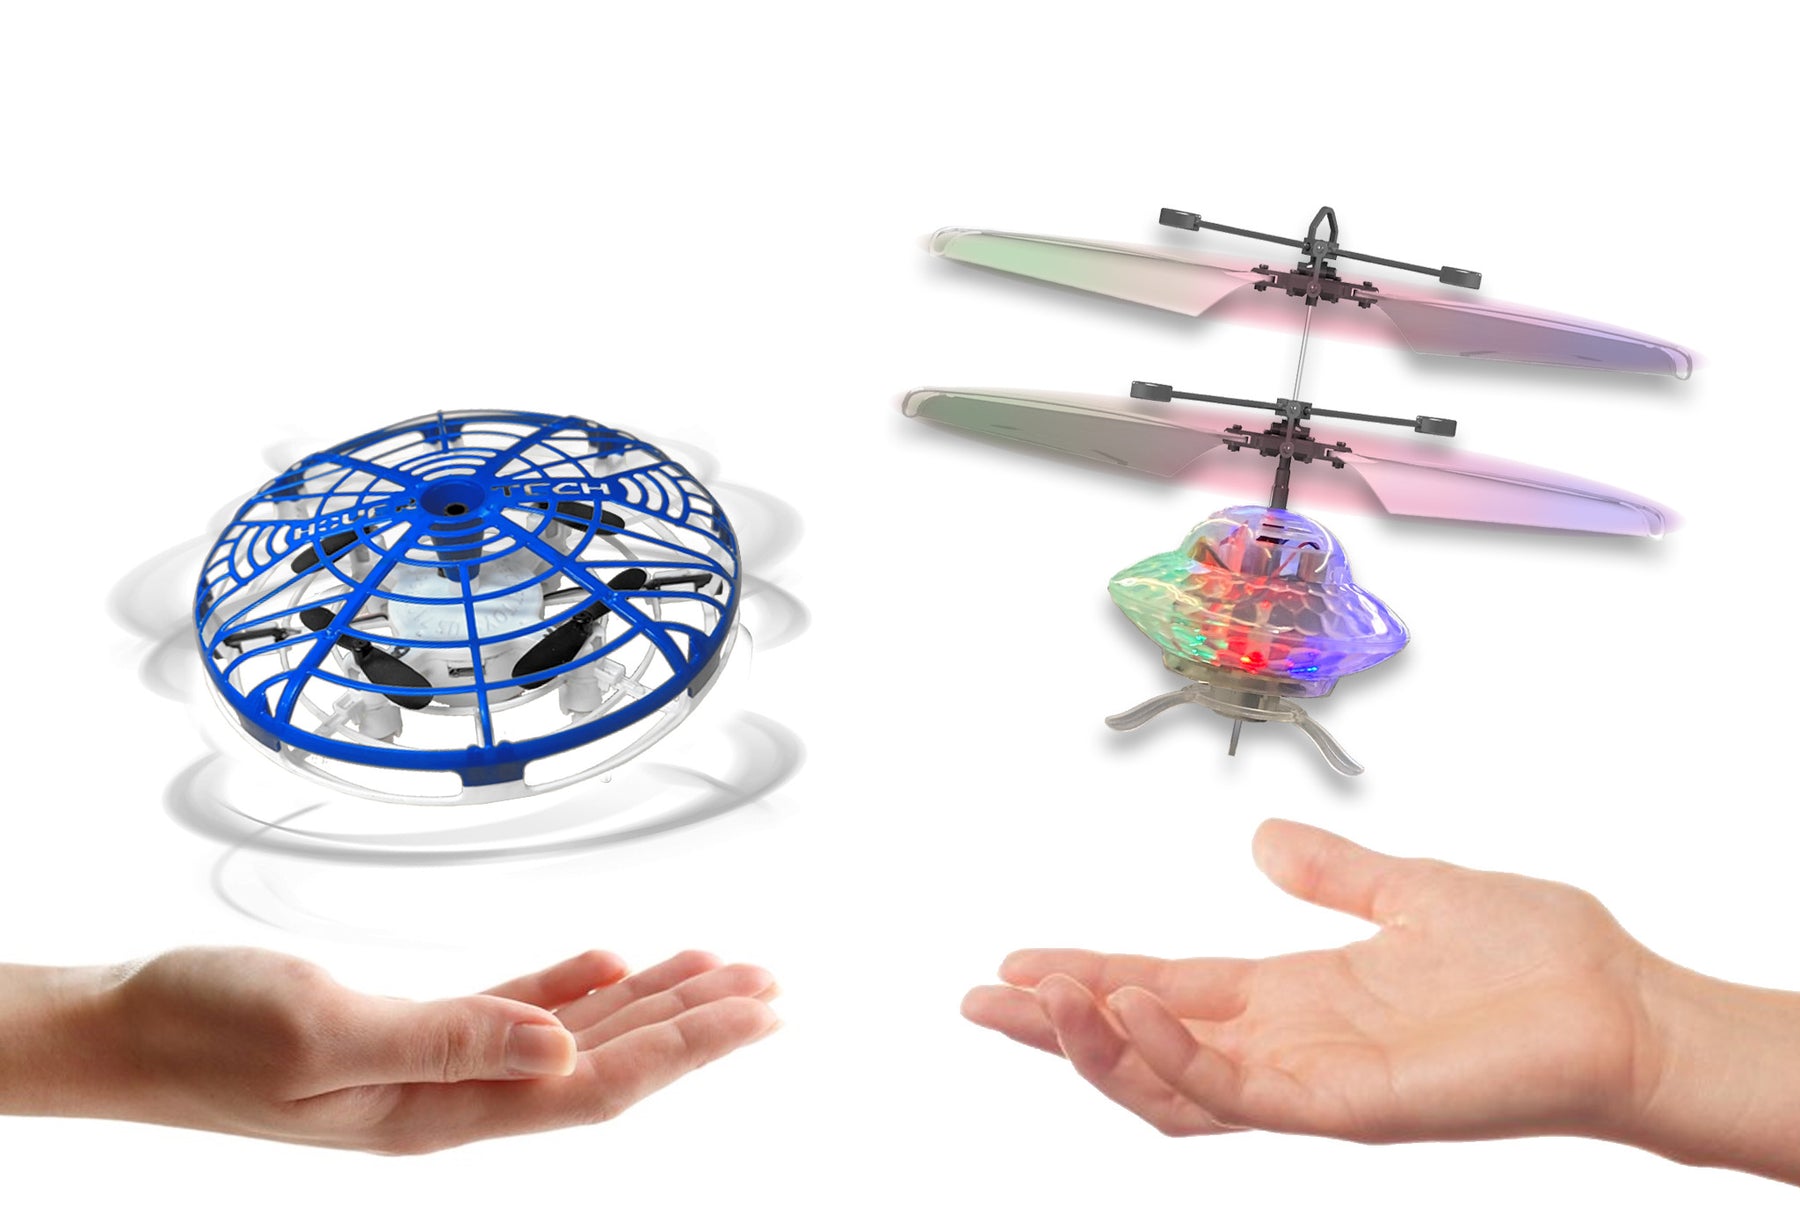 Aero-Drone Combo – Top Secret Toys